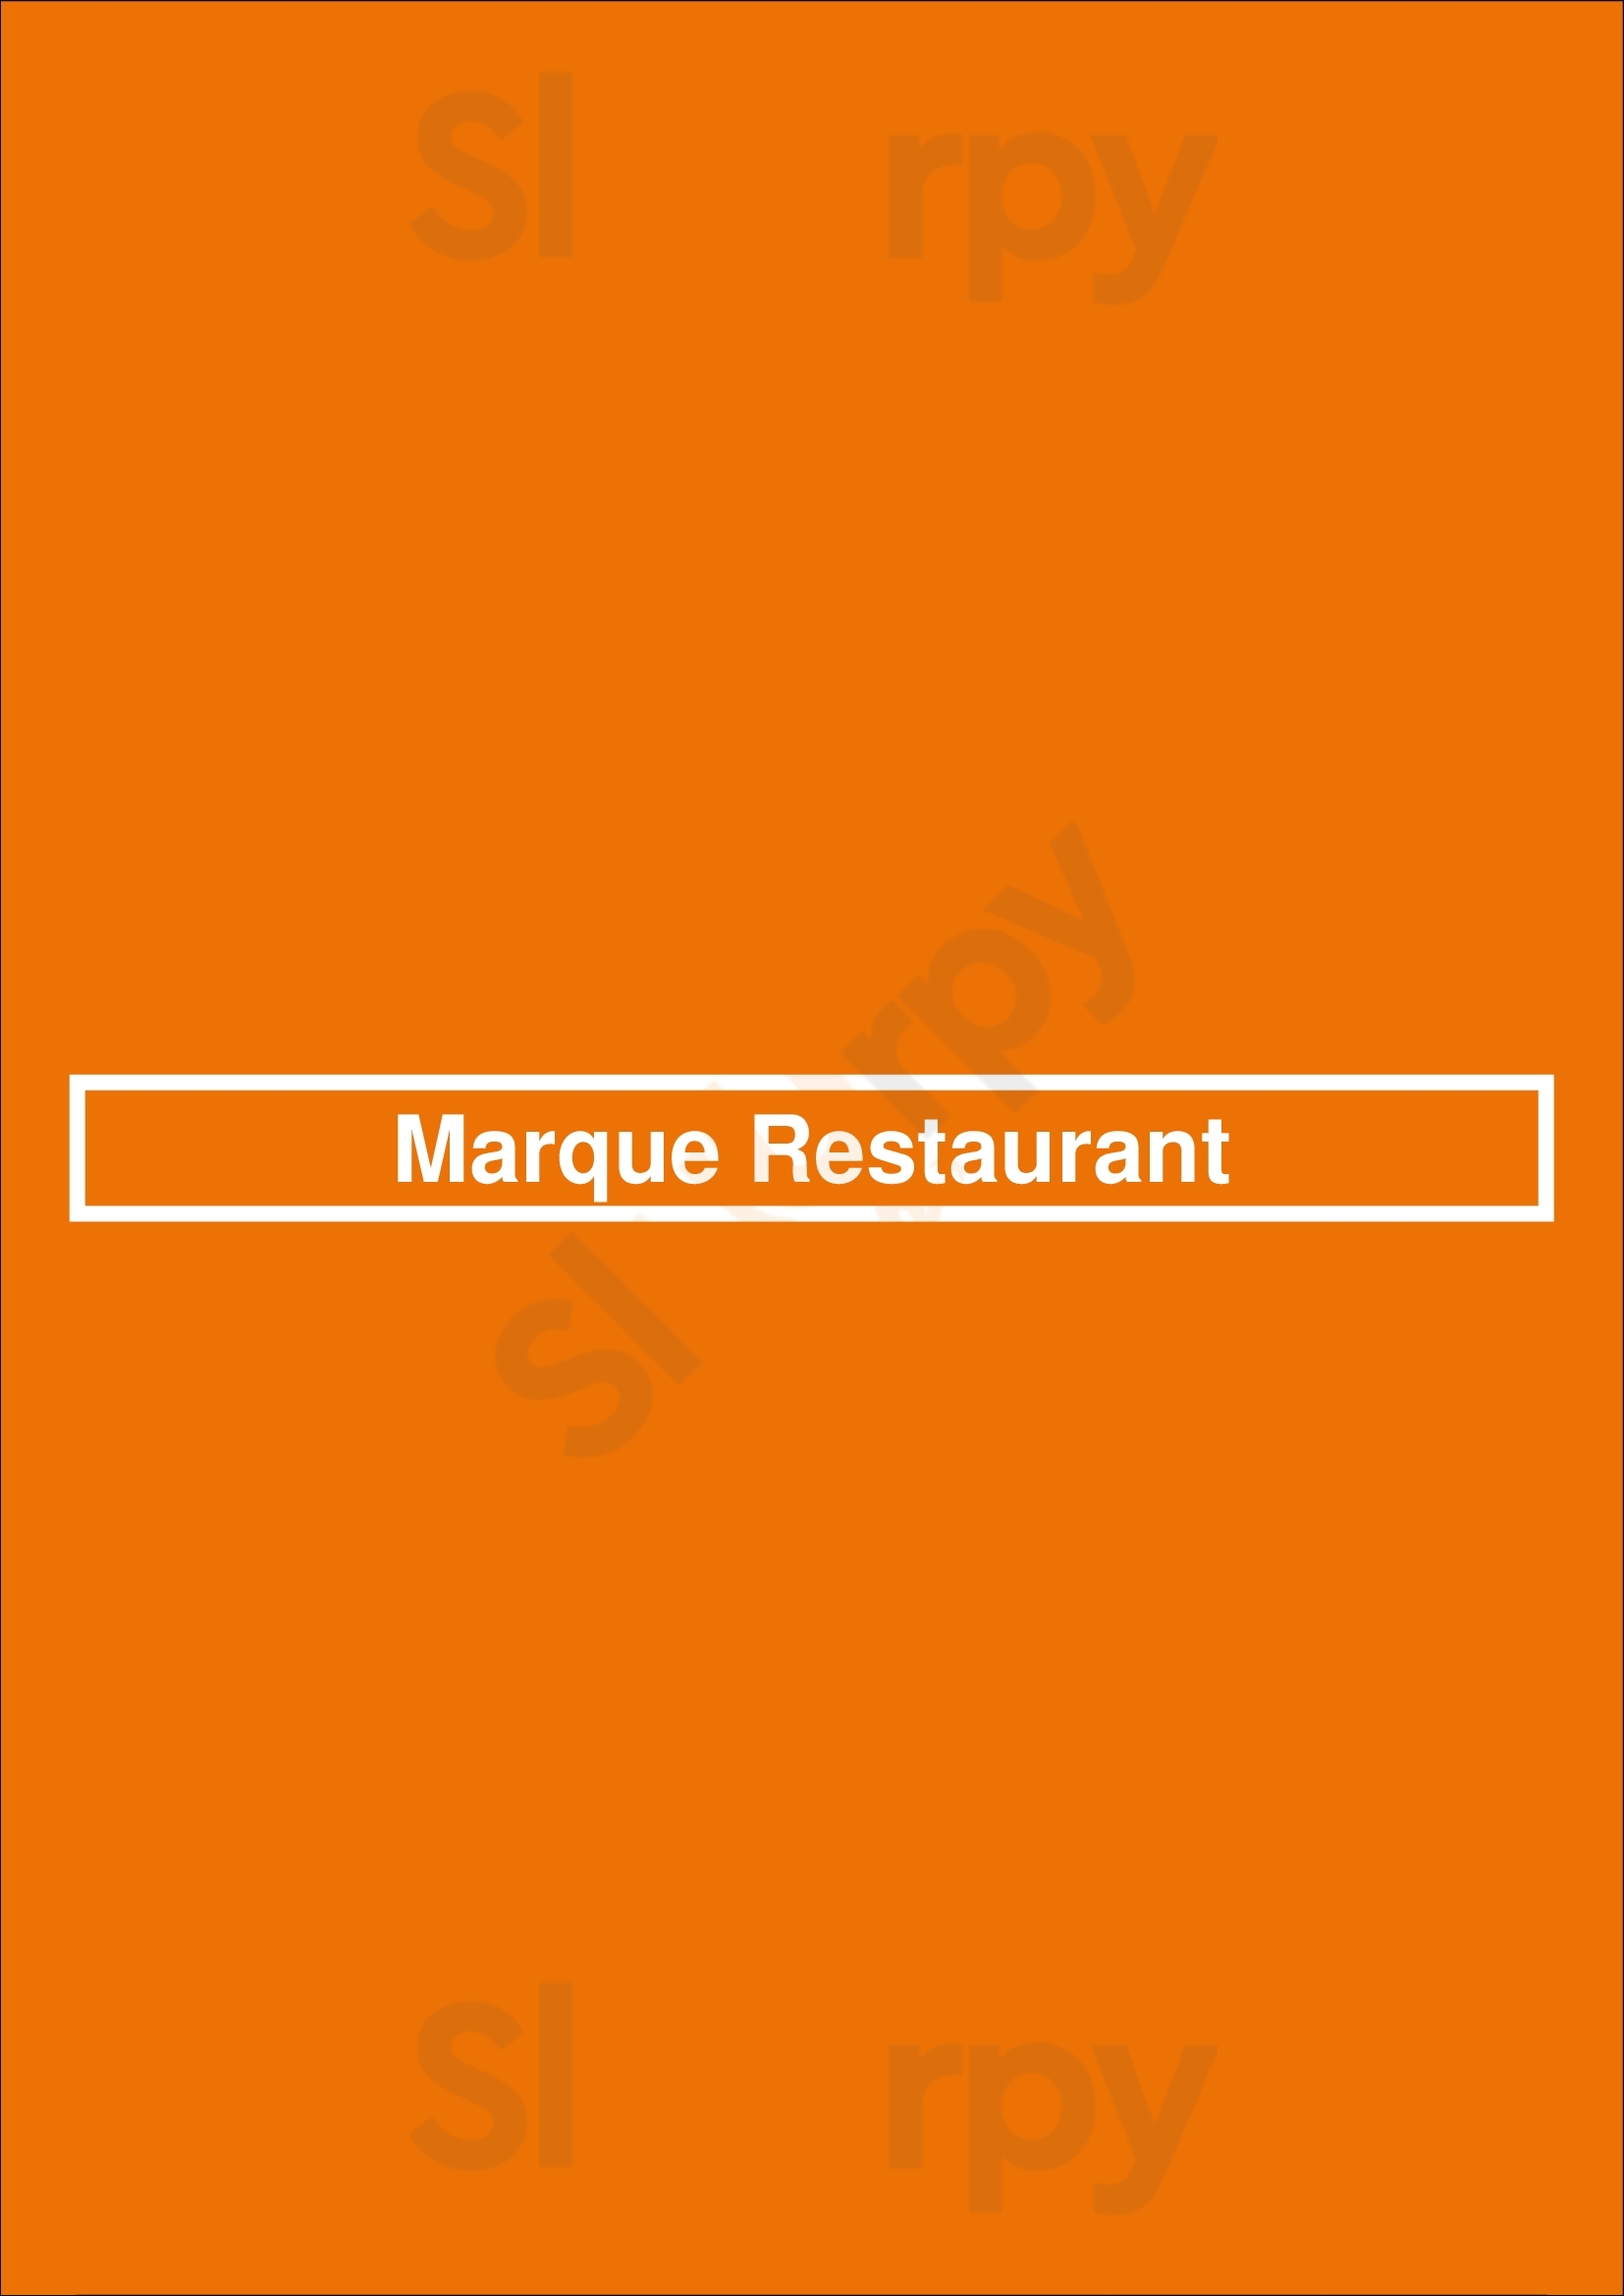 Marque Restaurant Hoorn Menu - 1